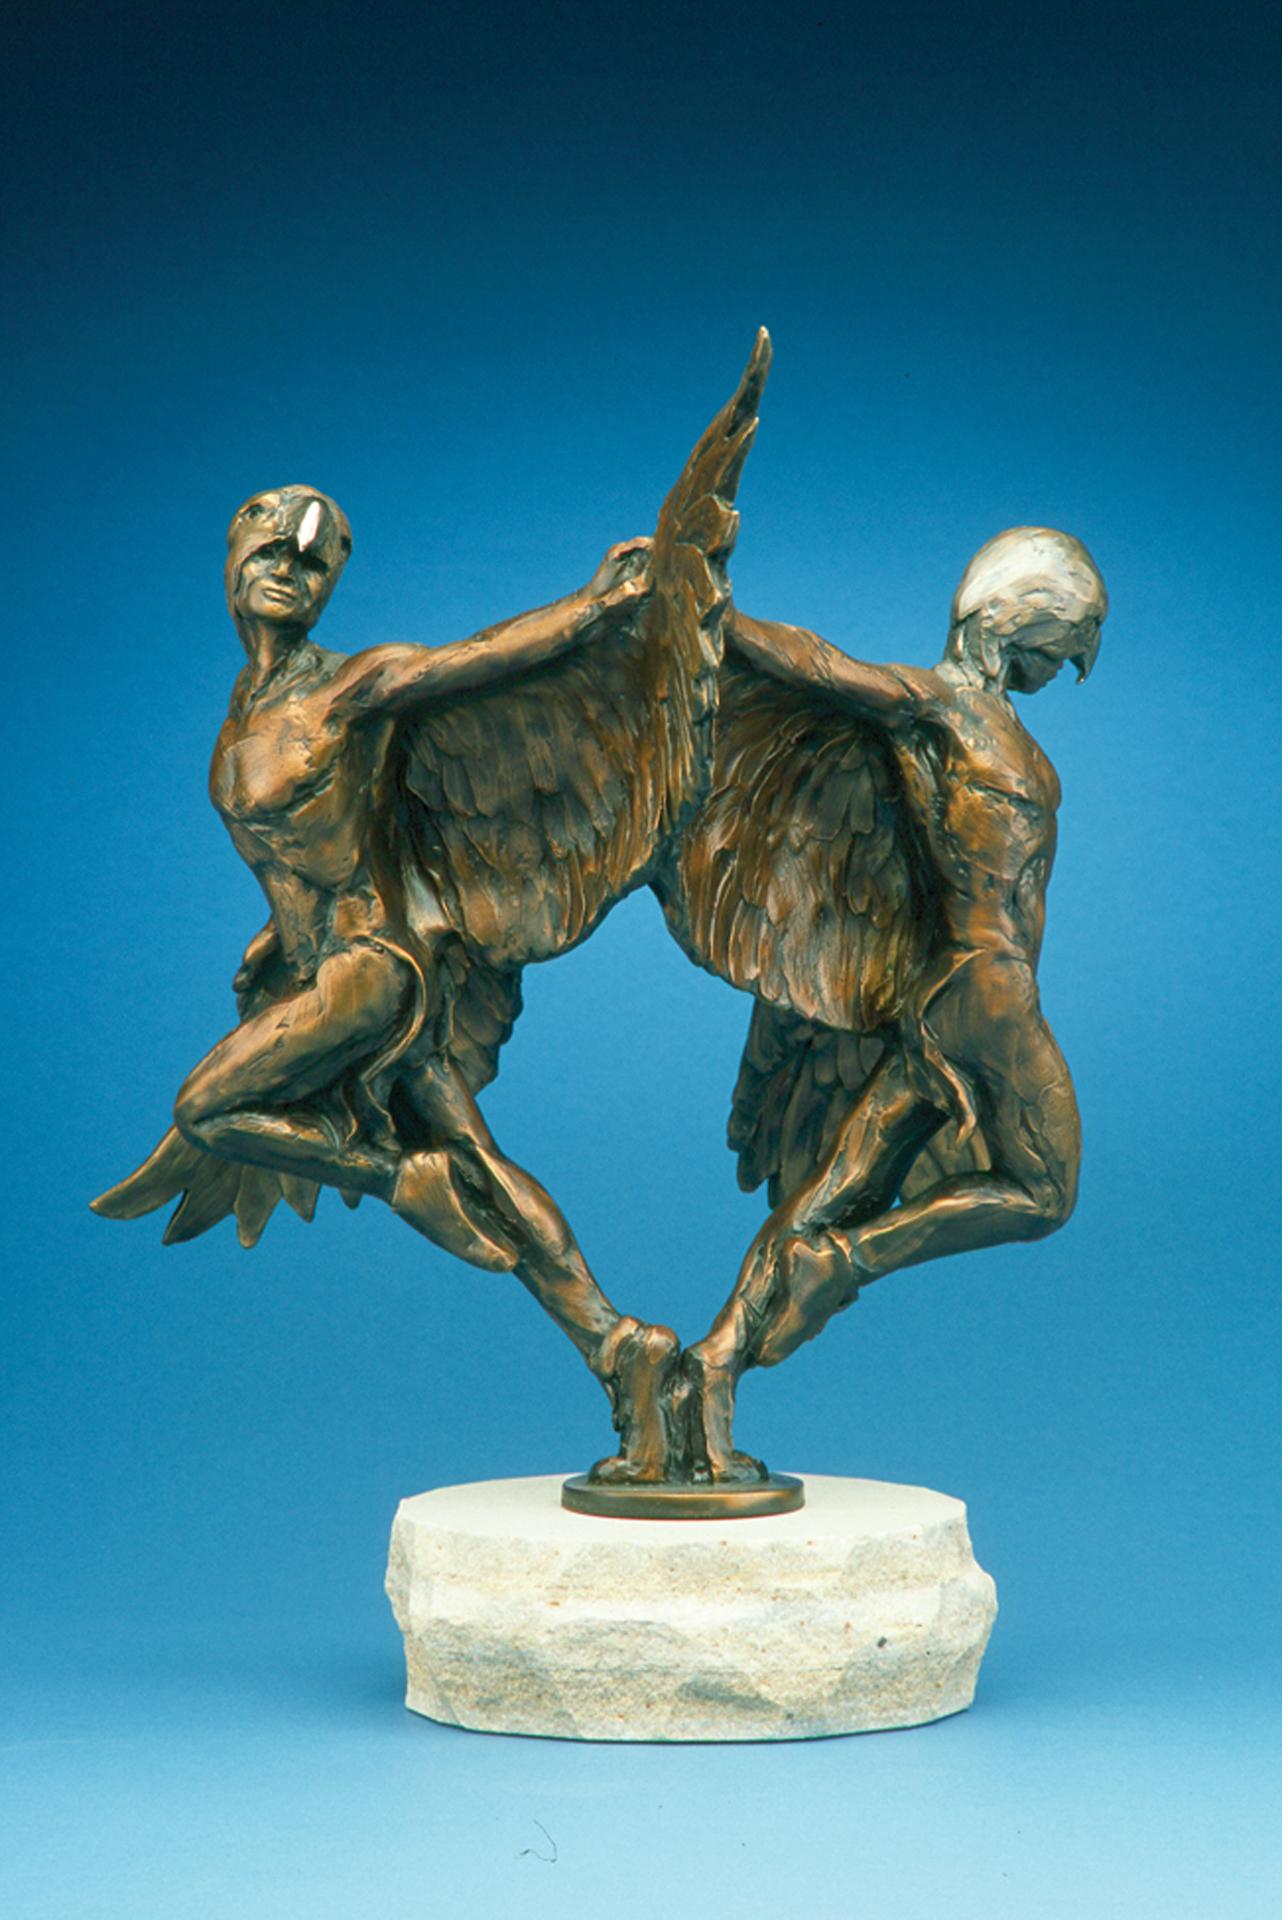 Denny Haskew Figurative Sculpture - At Eagle's Glance study